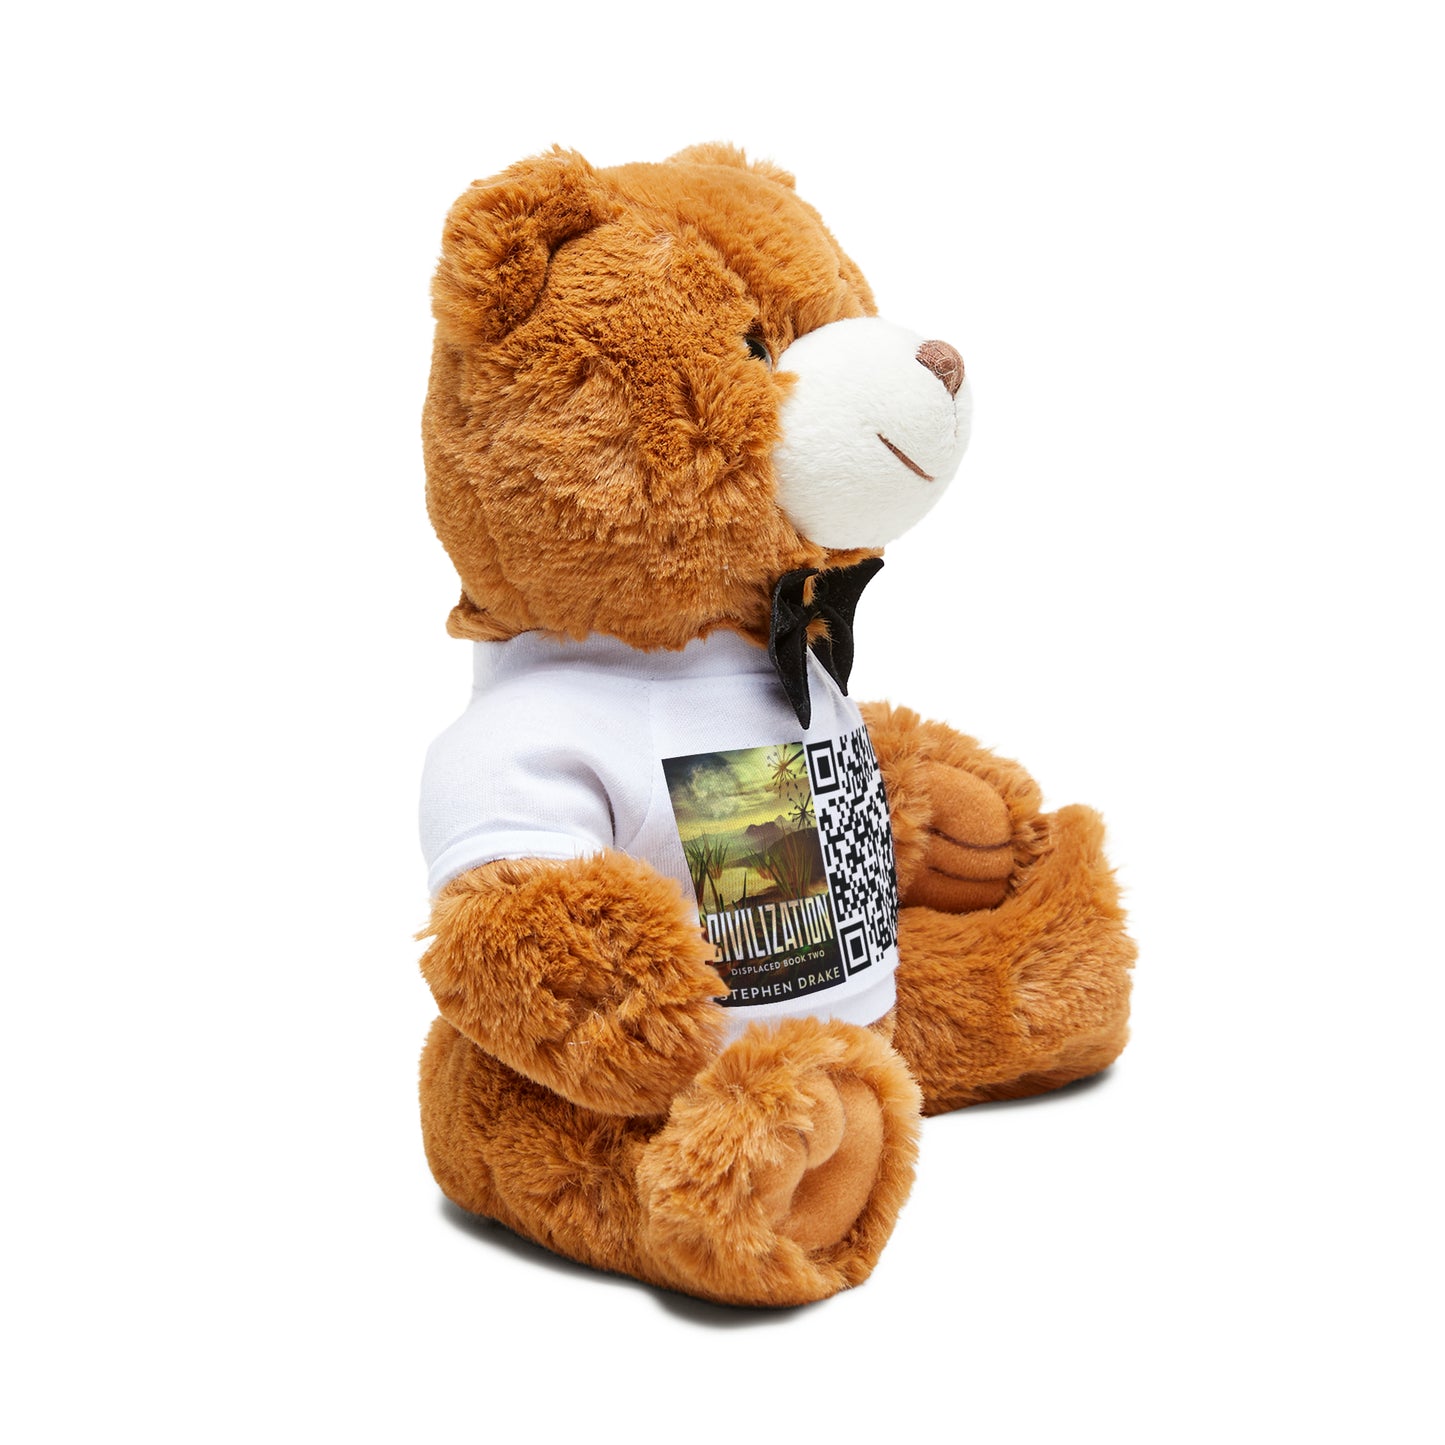 Civilization - Teddy Bear